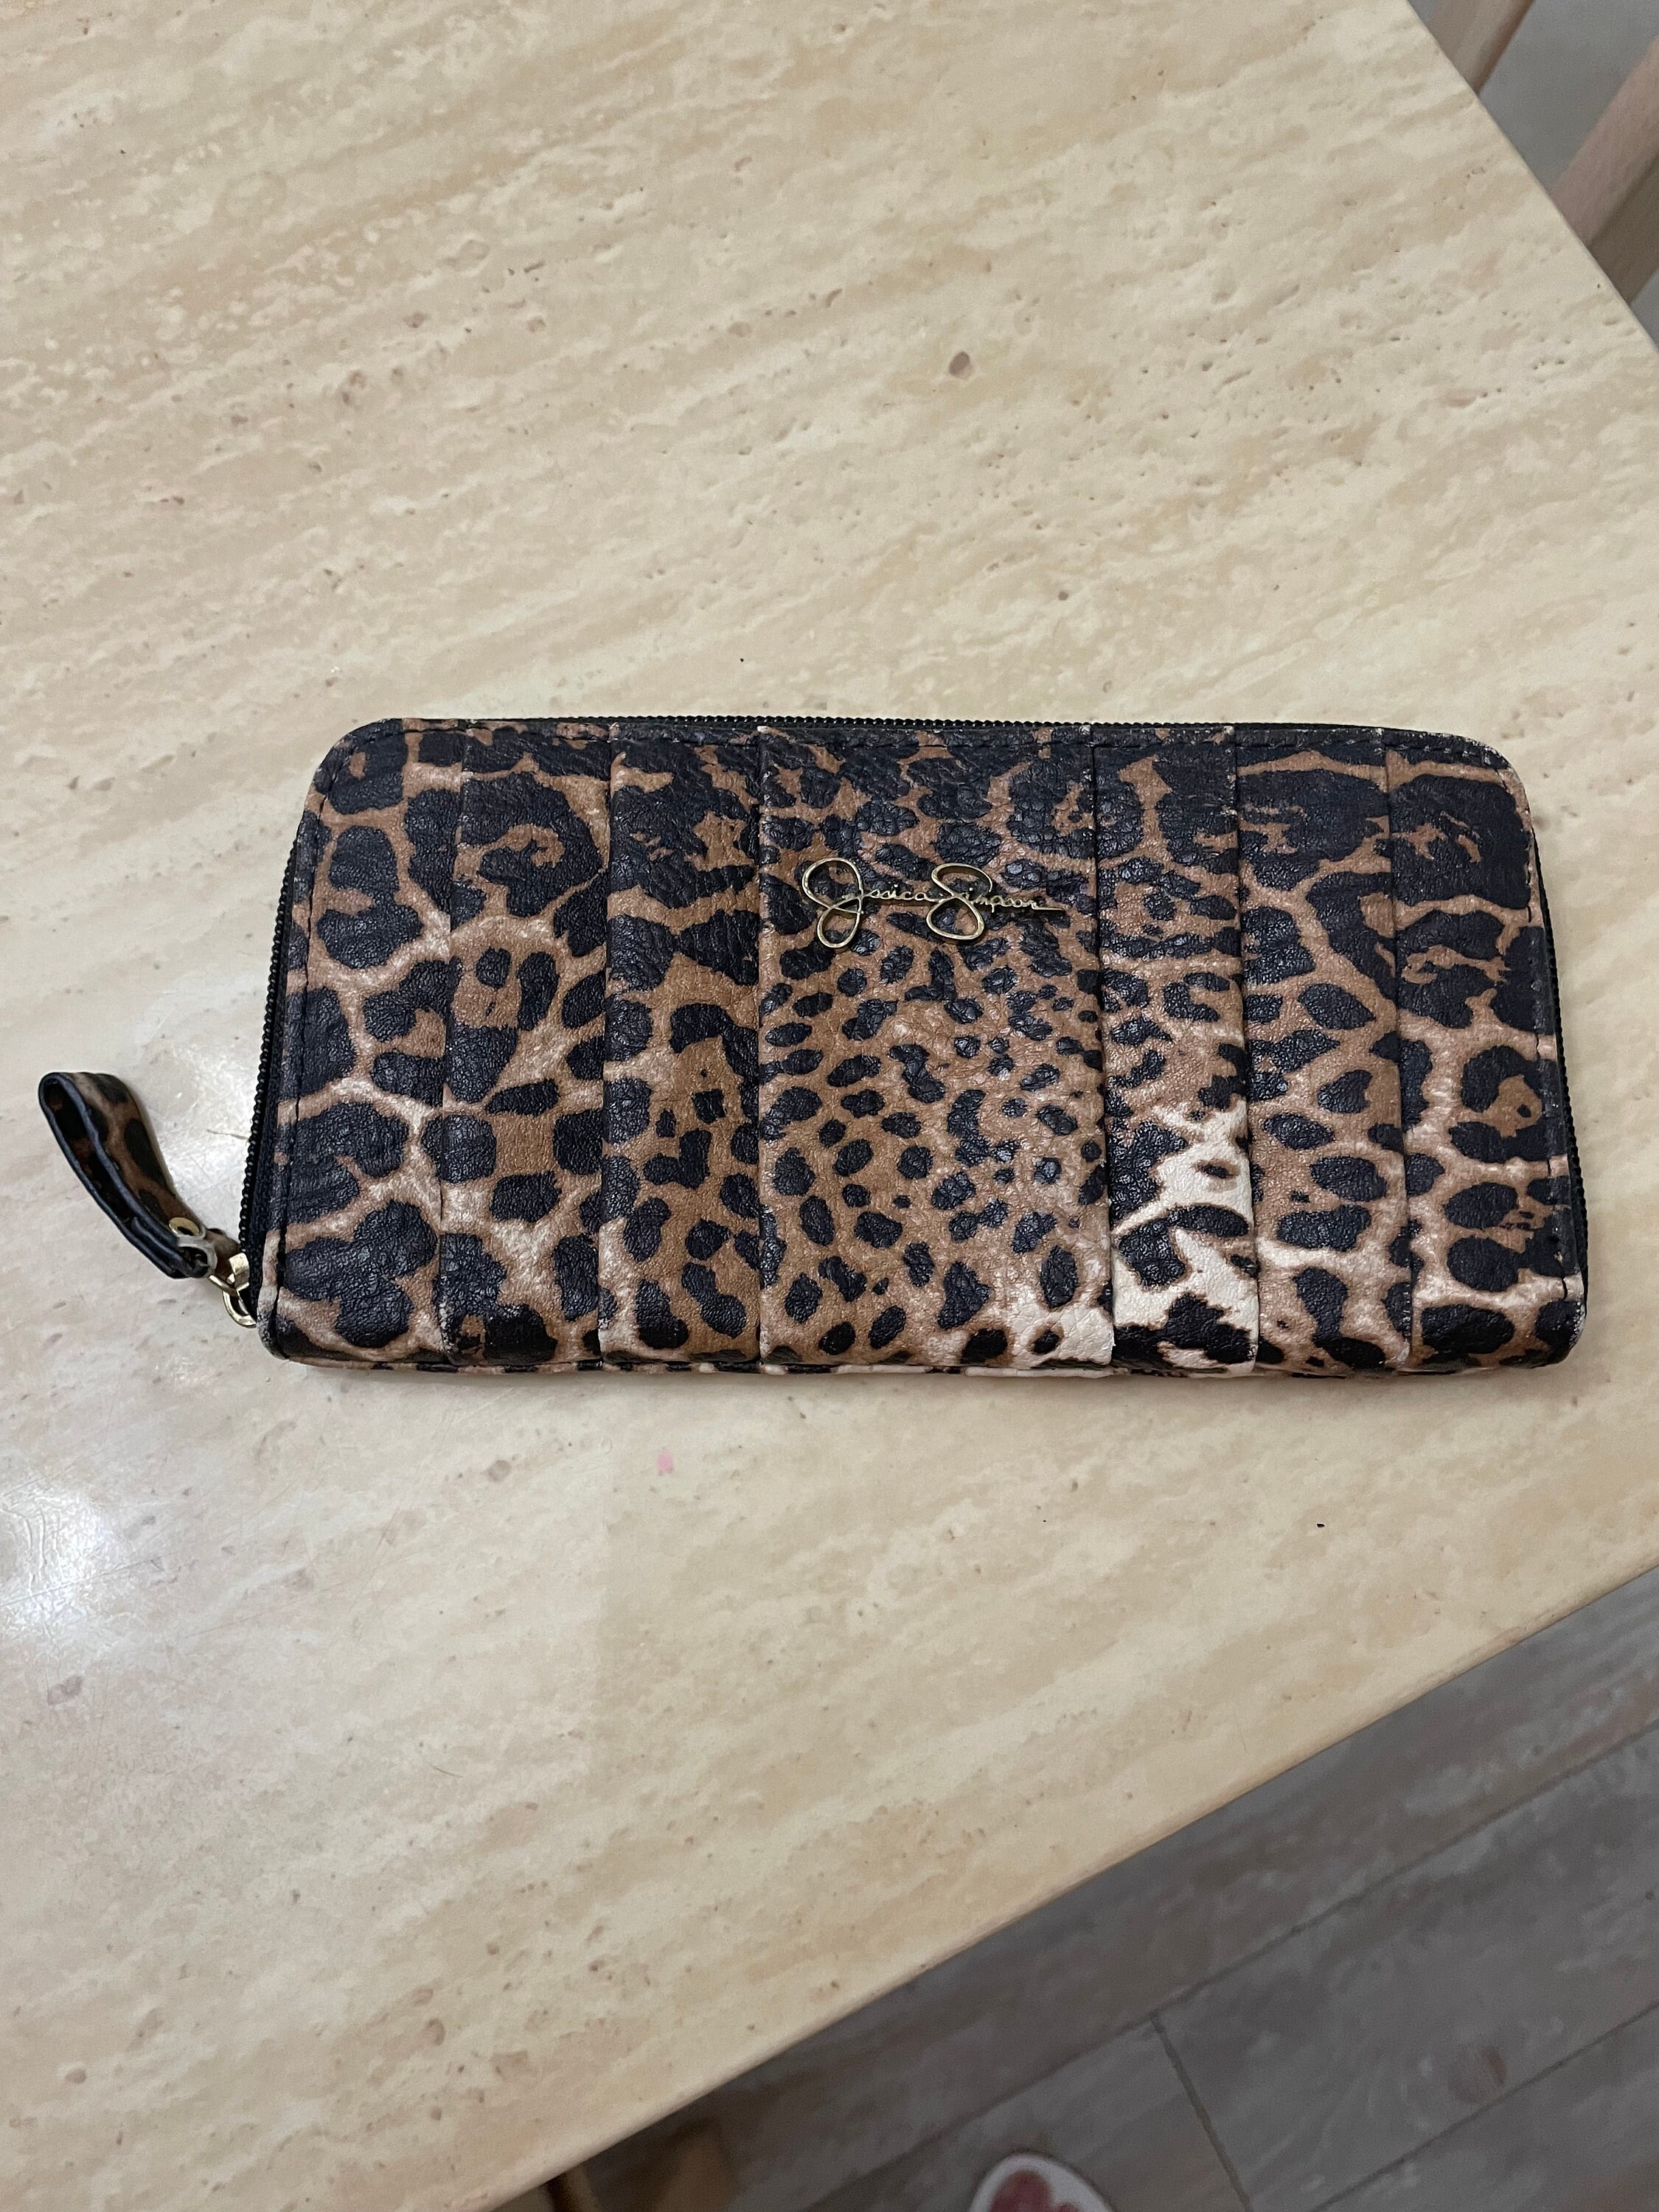 Jessica Simpson Leopard Crossbody Bags | Mercari